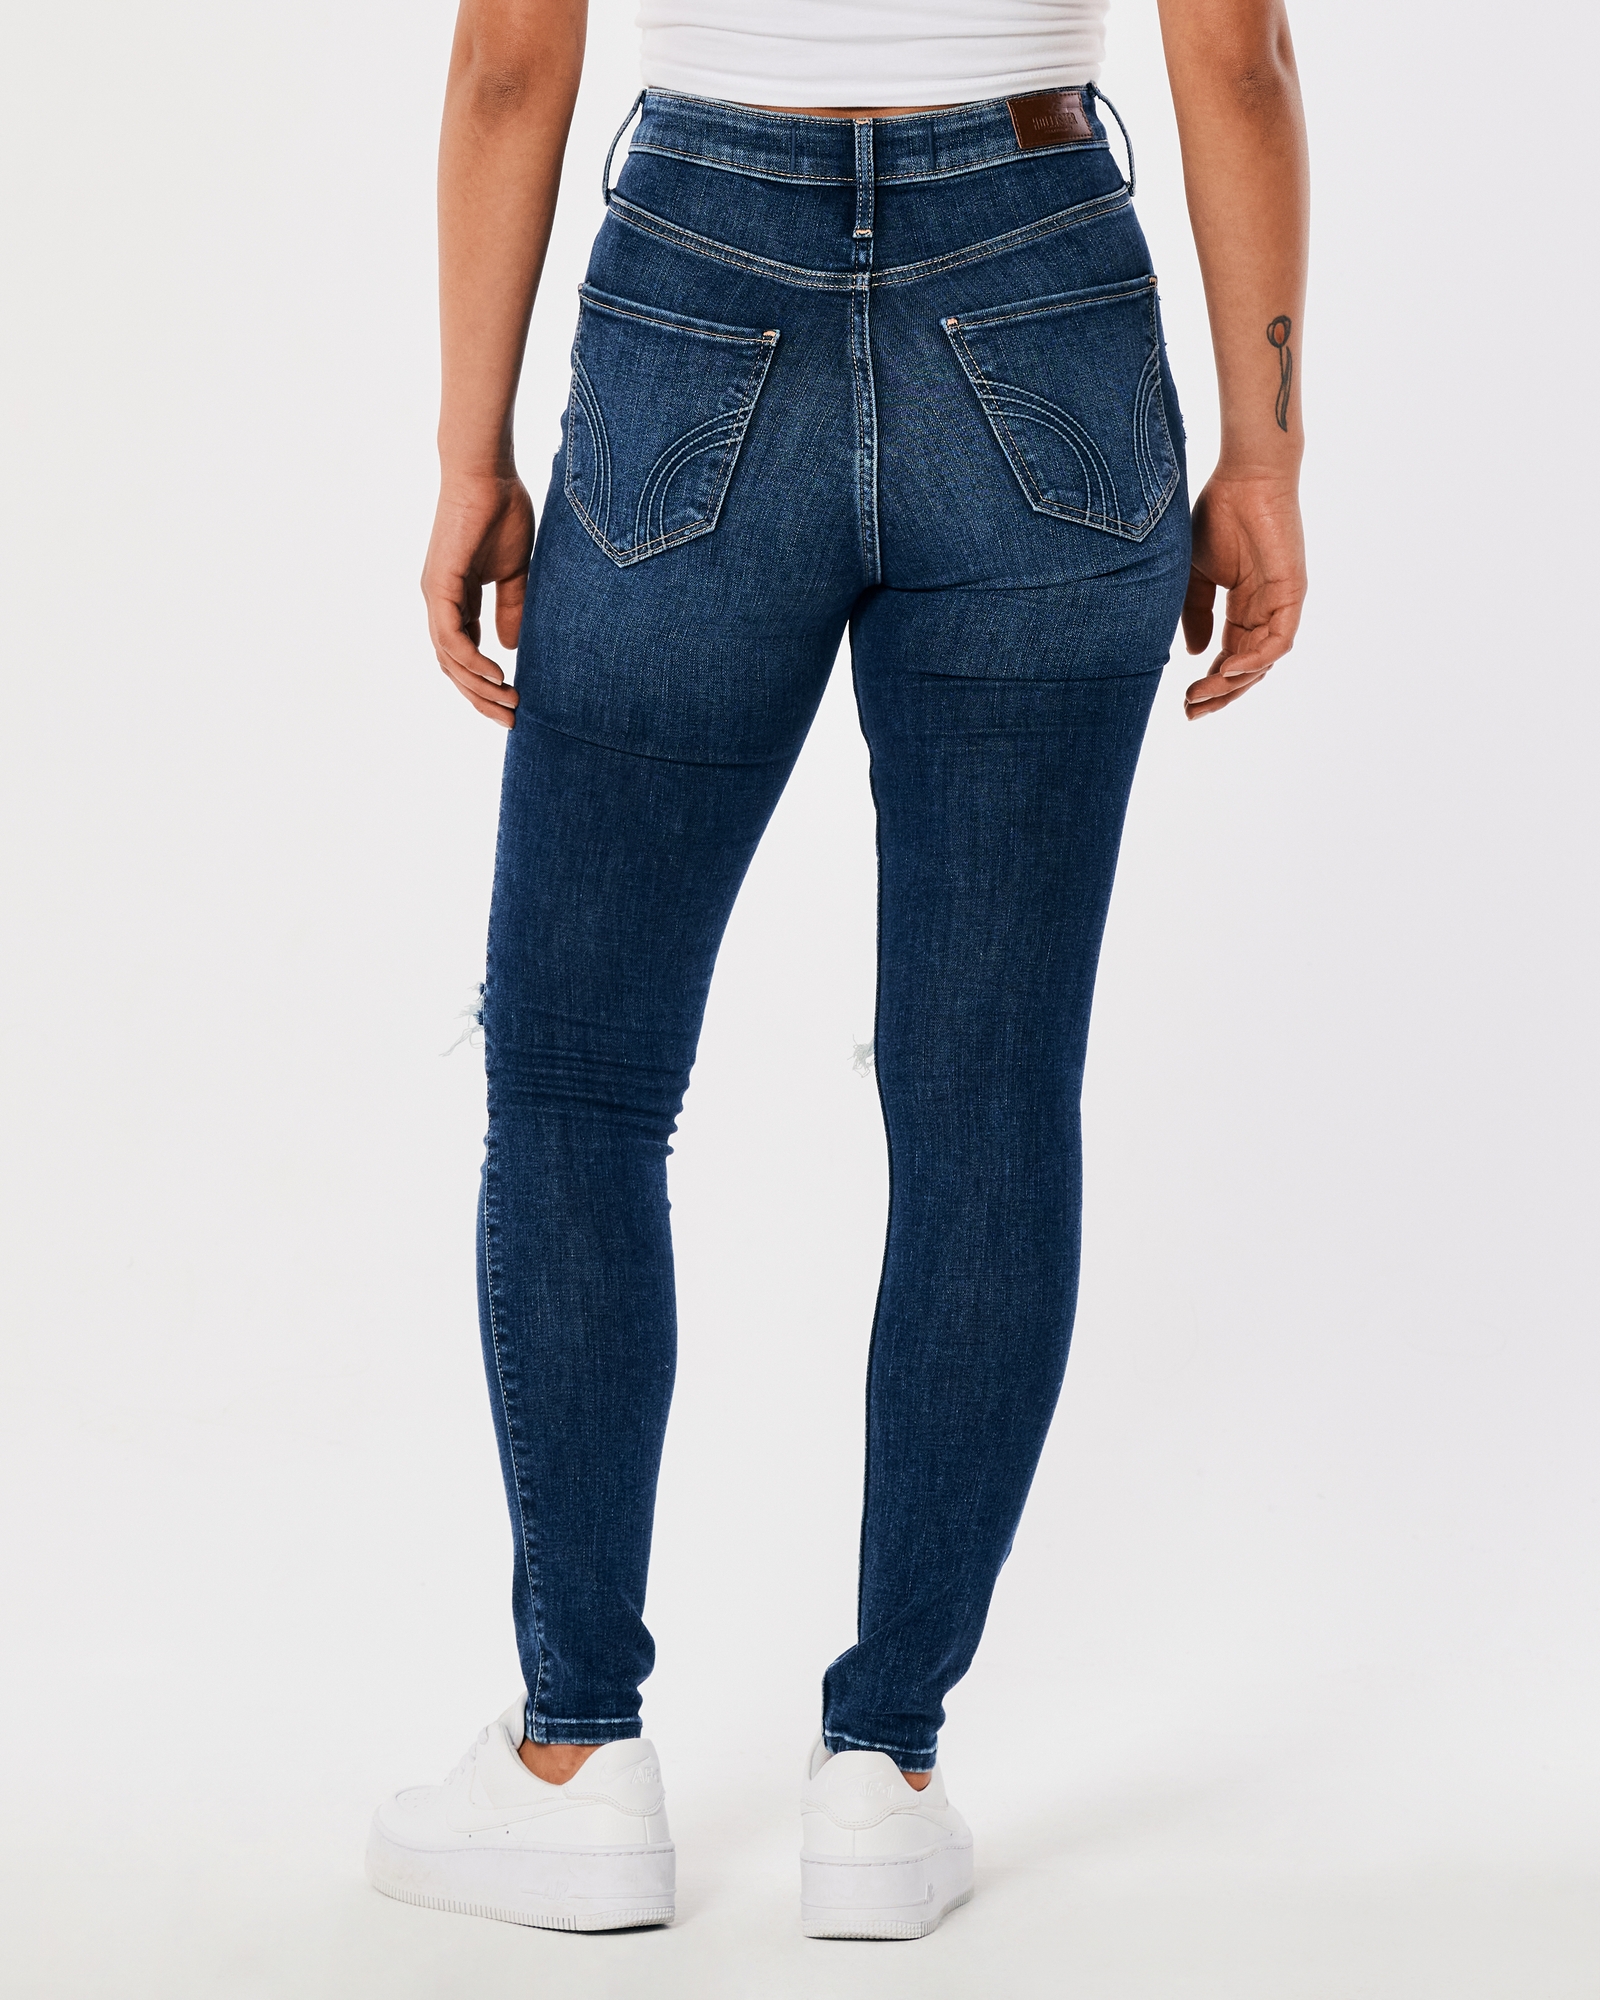 Hollister Women Ultra High Rise Super Skinny Jeans, Distressed, Size 5R,  W27 L30